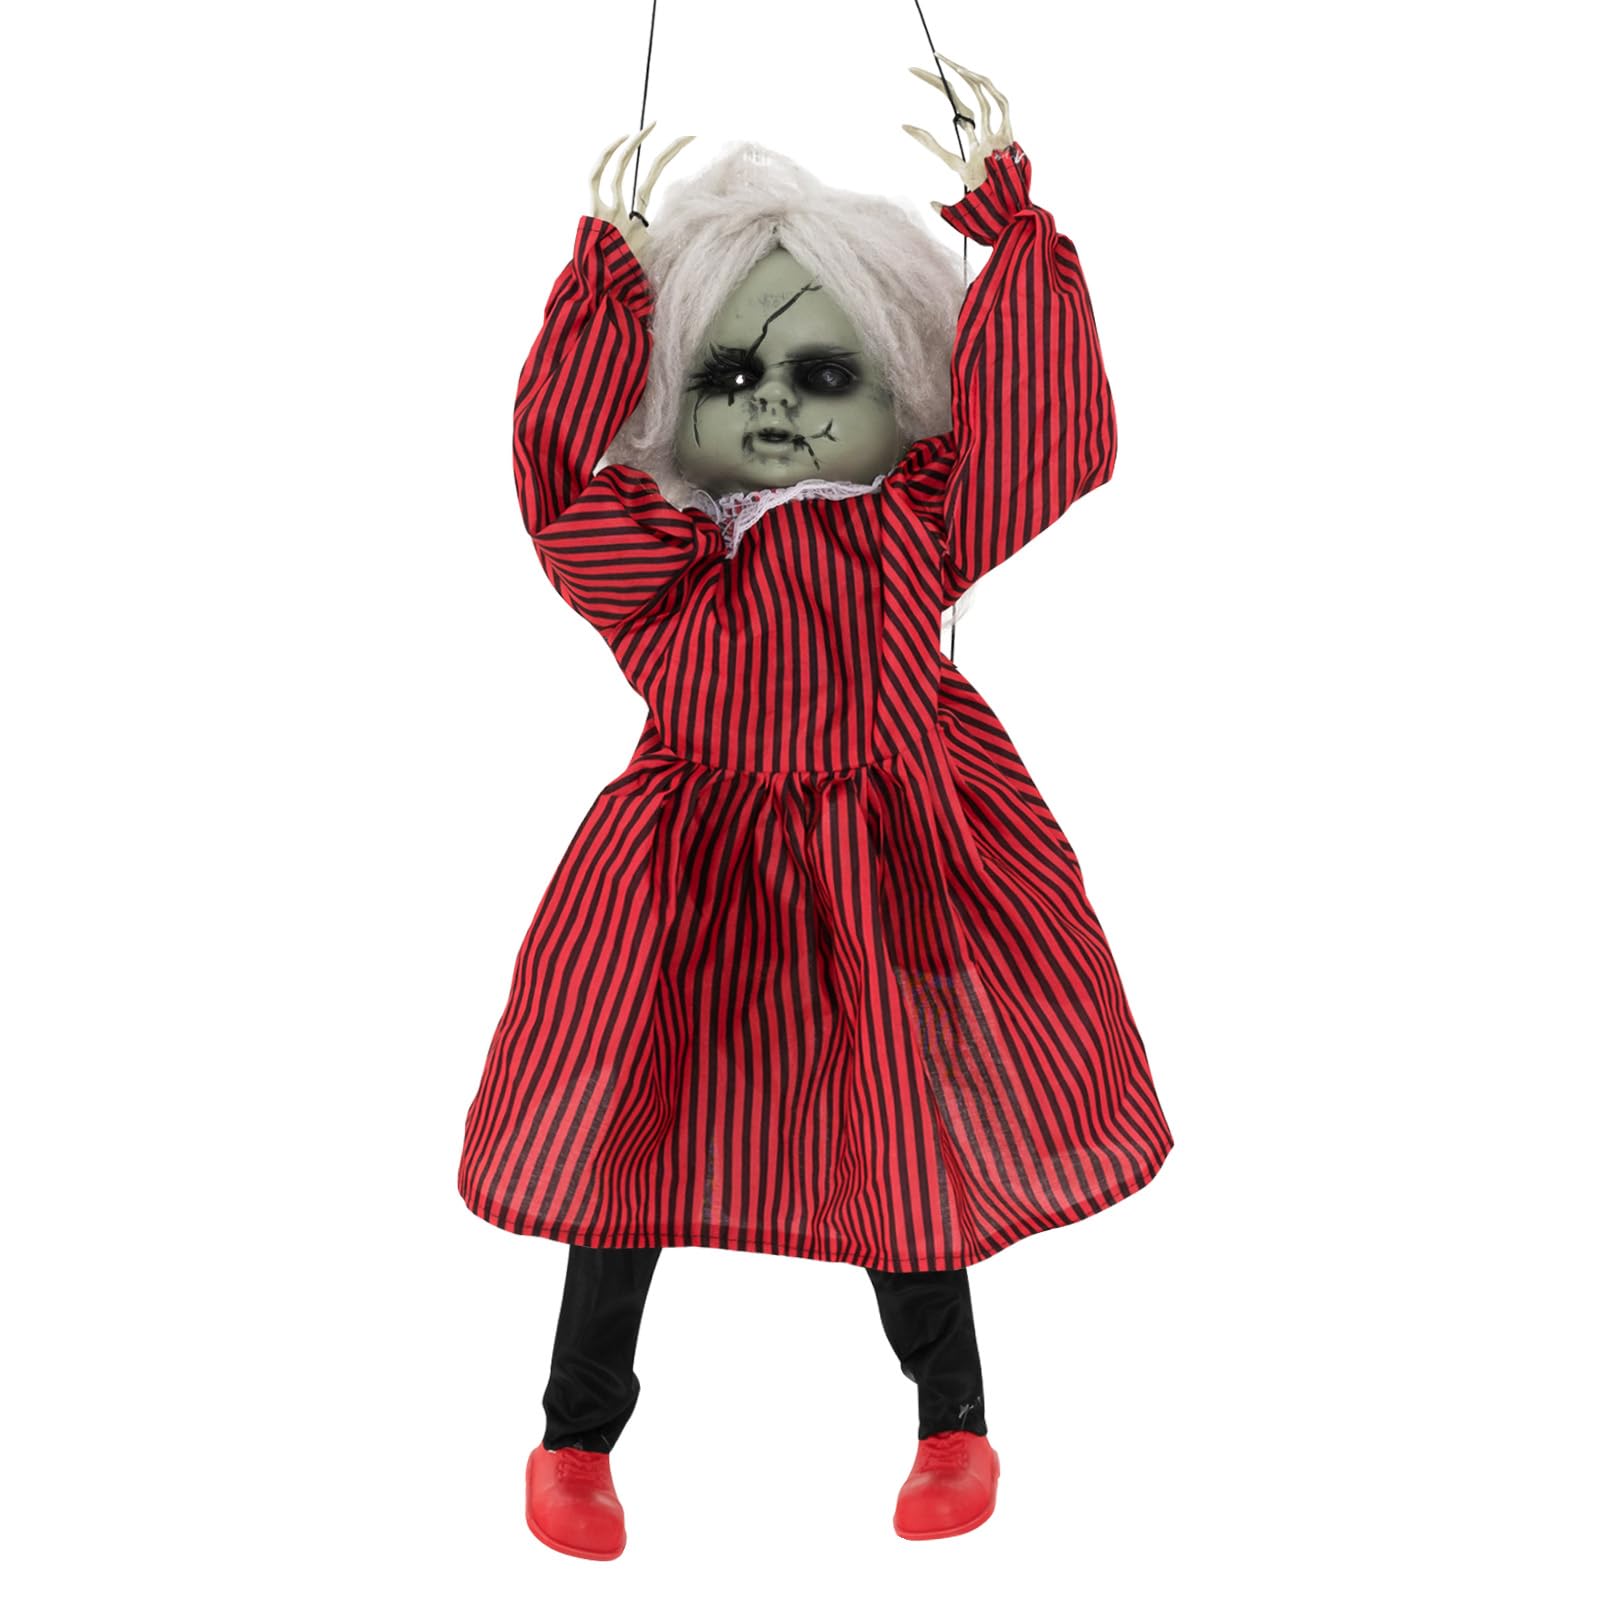 Tangkula 2.8FT Halloween Animatronic Roaming Creepy Doll